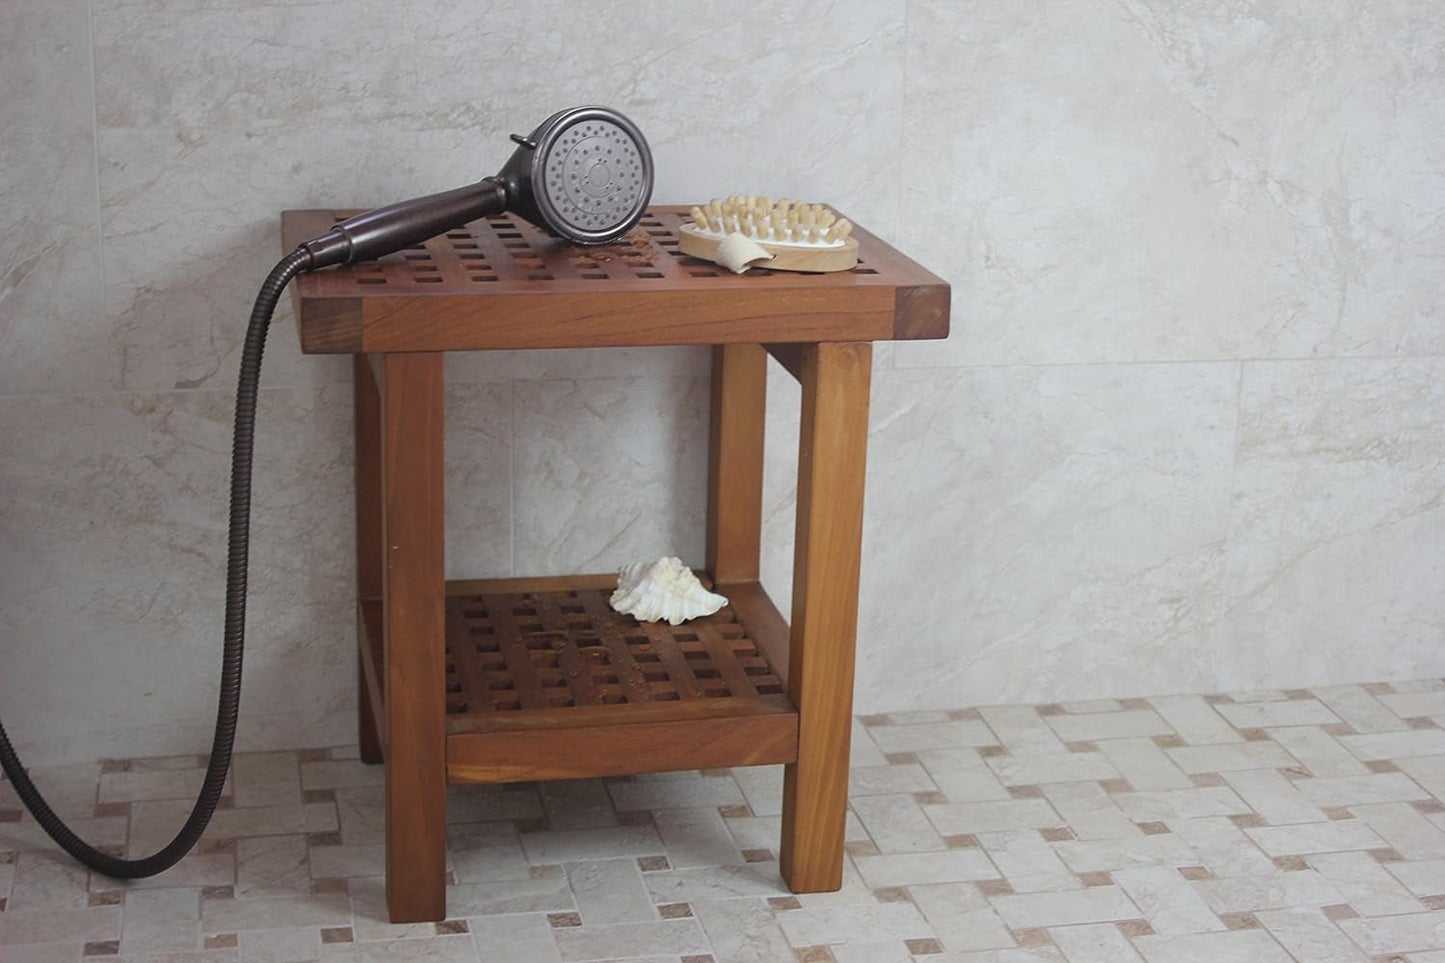 the Original 18" Grate Teak Shower Bench with Shelf